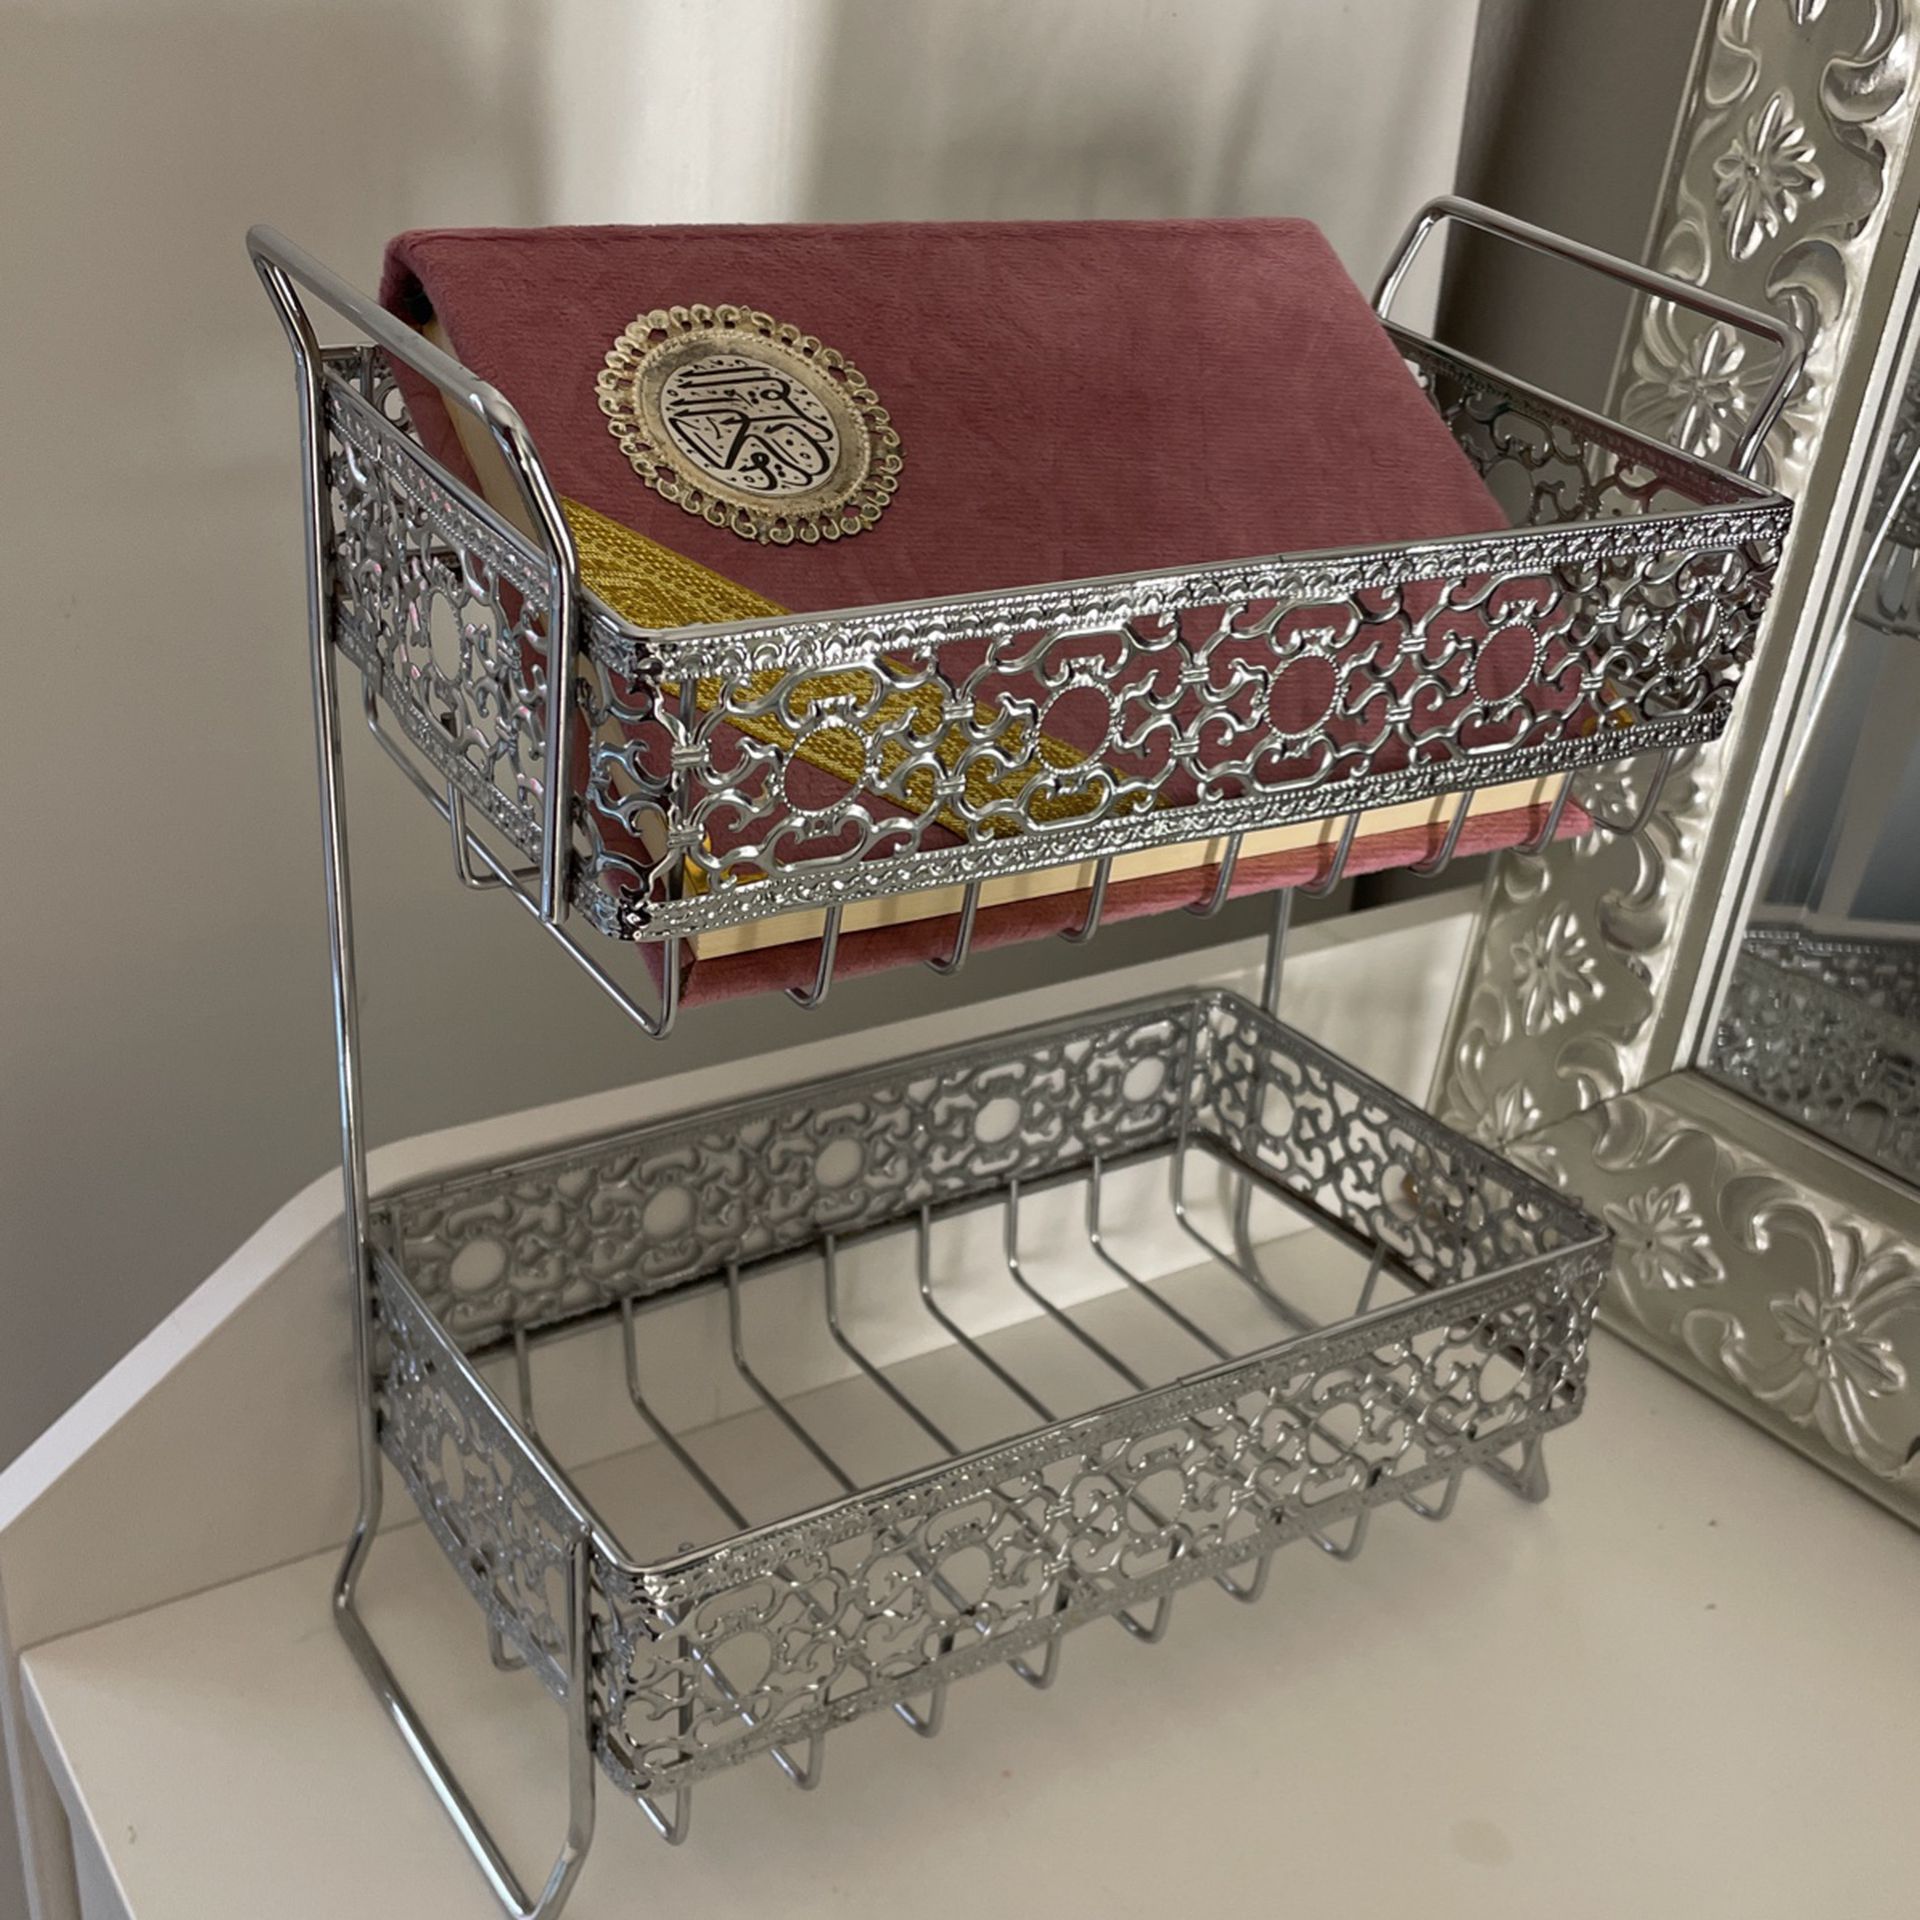 Tray - Organizer (silver vanity tray)